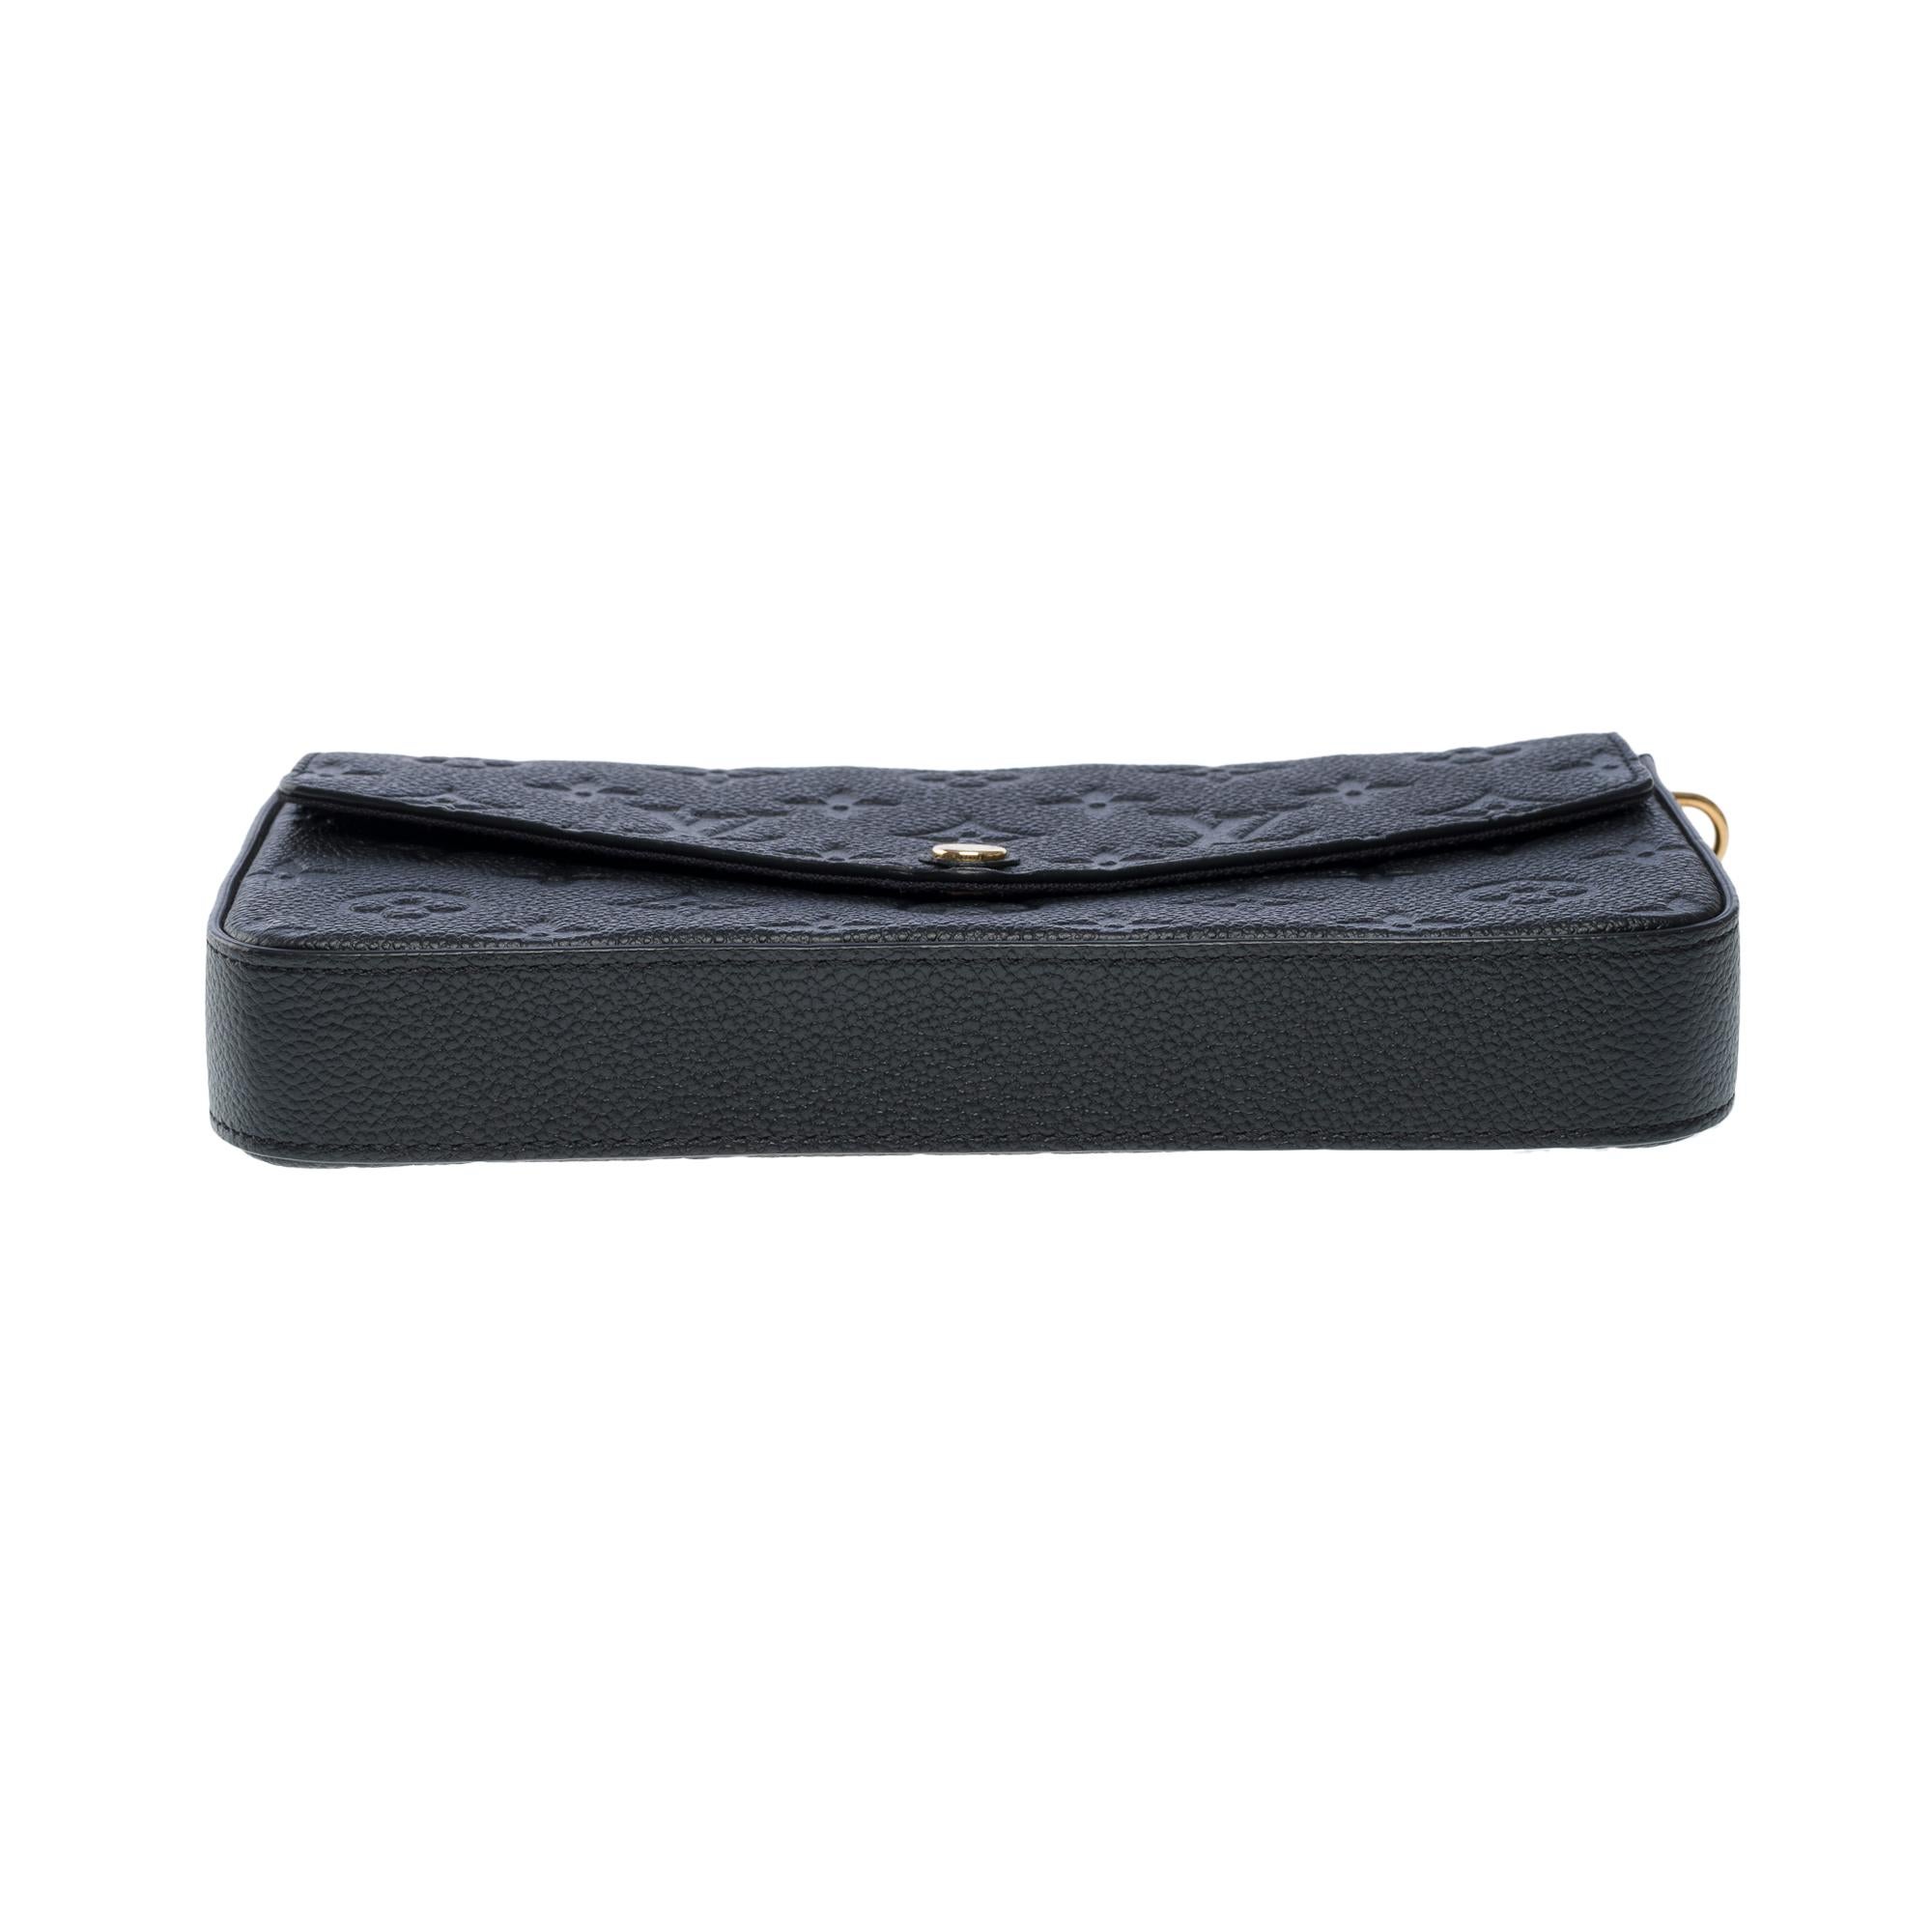 Louis Vuitton Felicie Pochette shoulder bag in black monogram leather, GHW For Sale 6